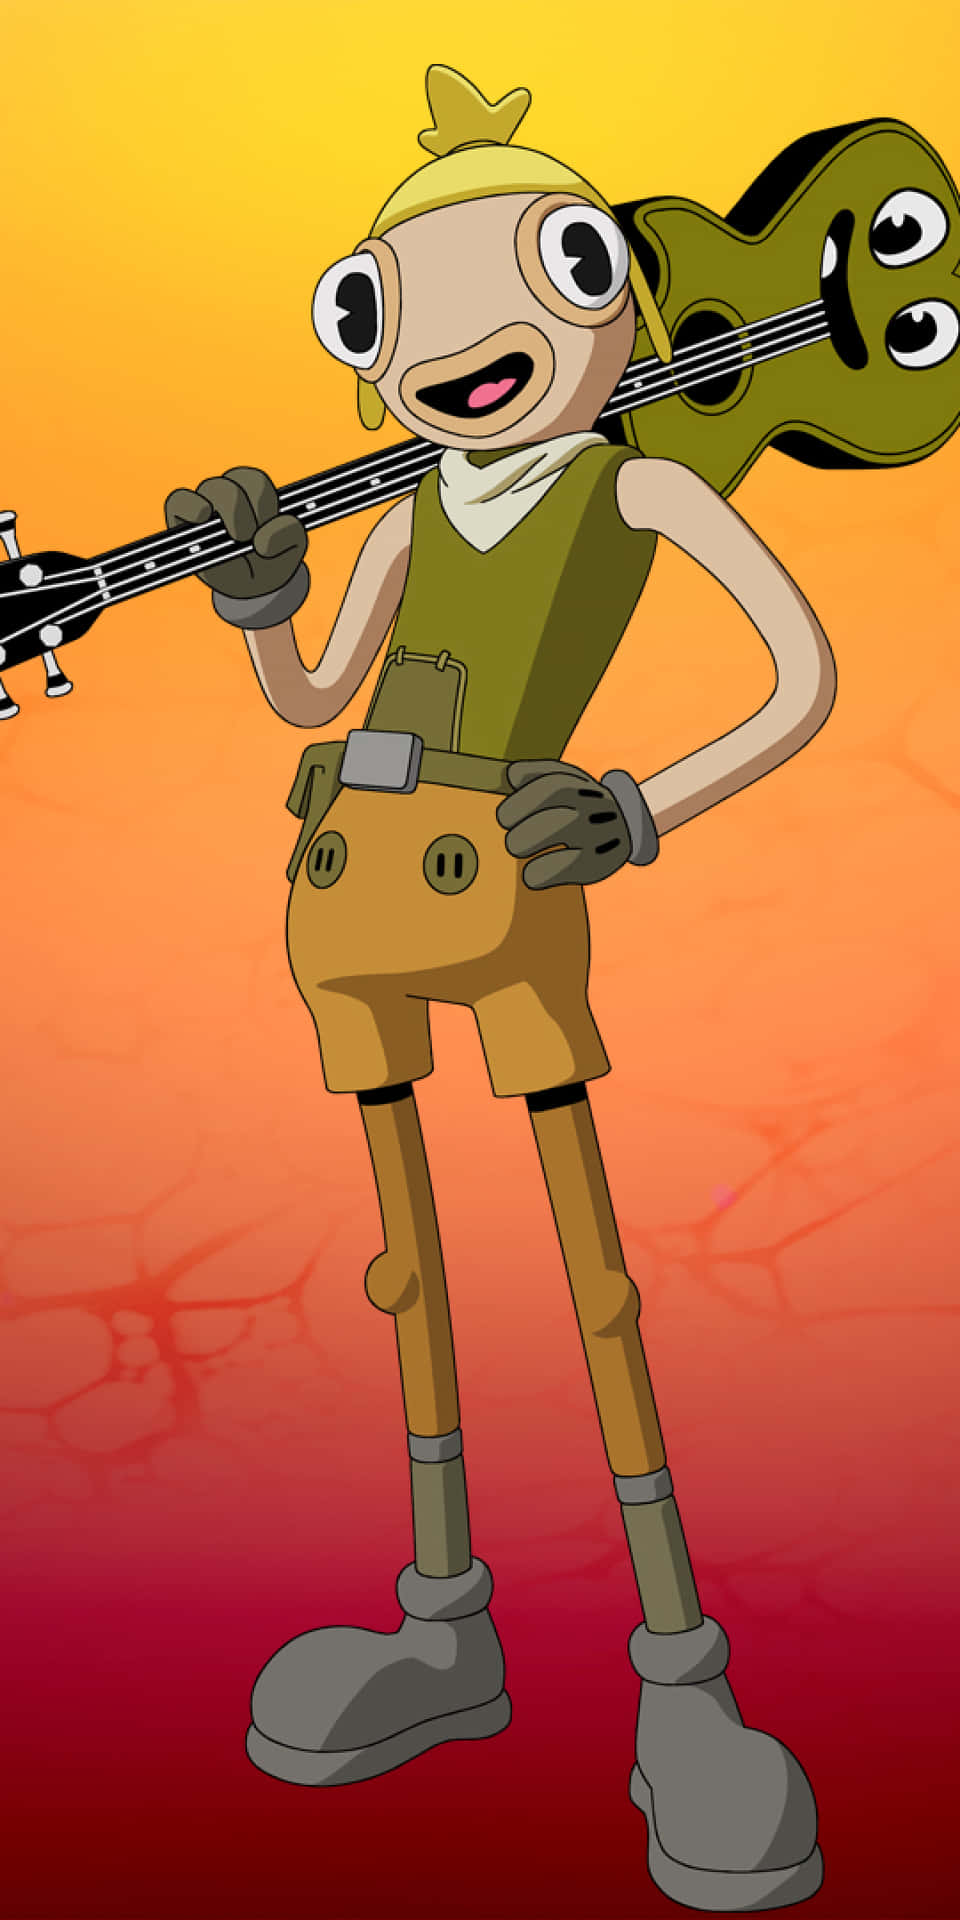 A Cartoon Character Holding A Guitar